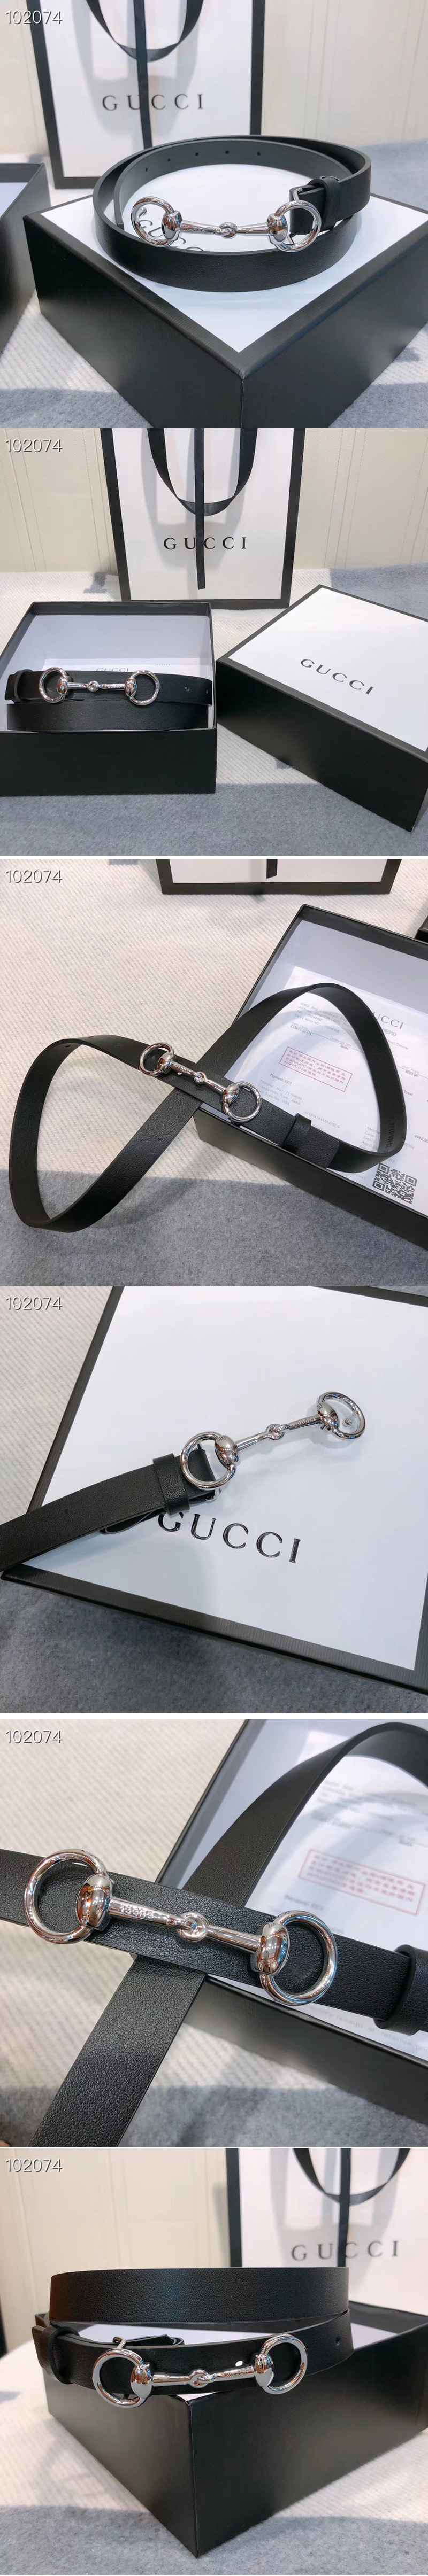 Replica Women's Gucci 230127 Leather belt 2cm Silver Buckle in Black Leather